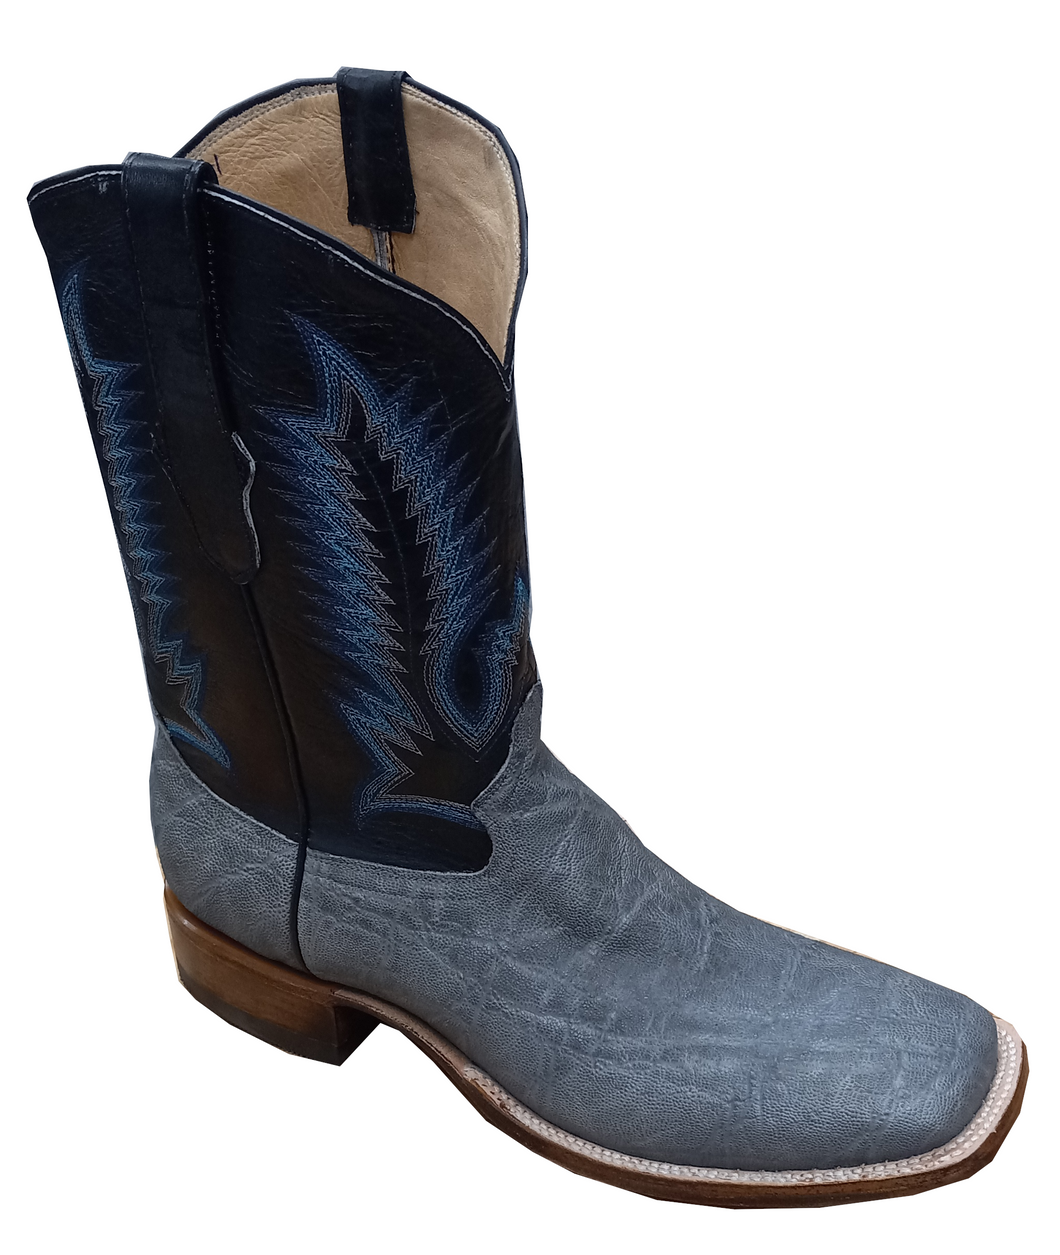 Cowtown Grey Elephant Boot - Q834